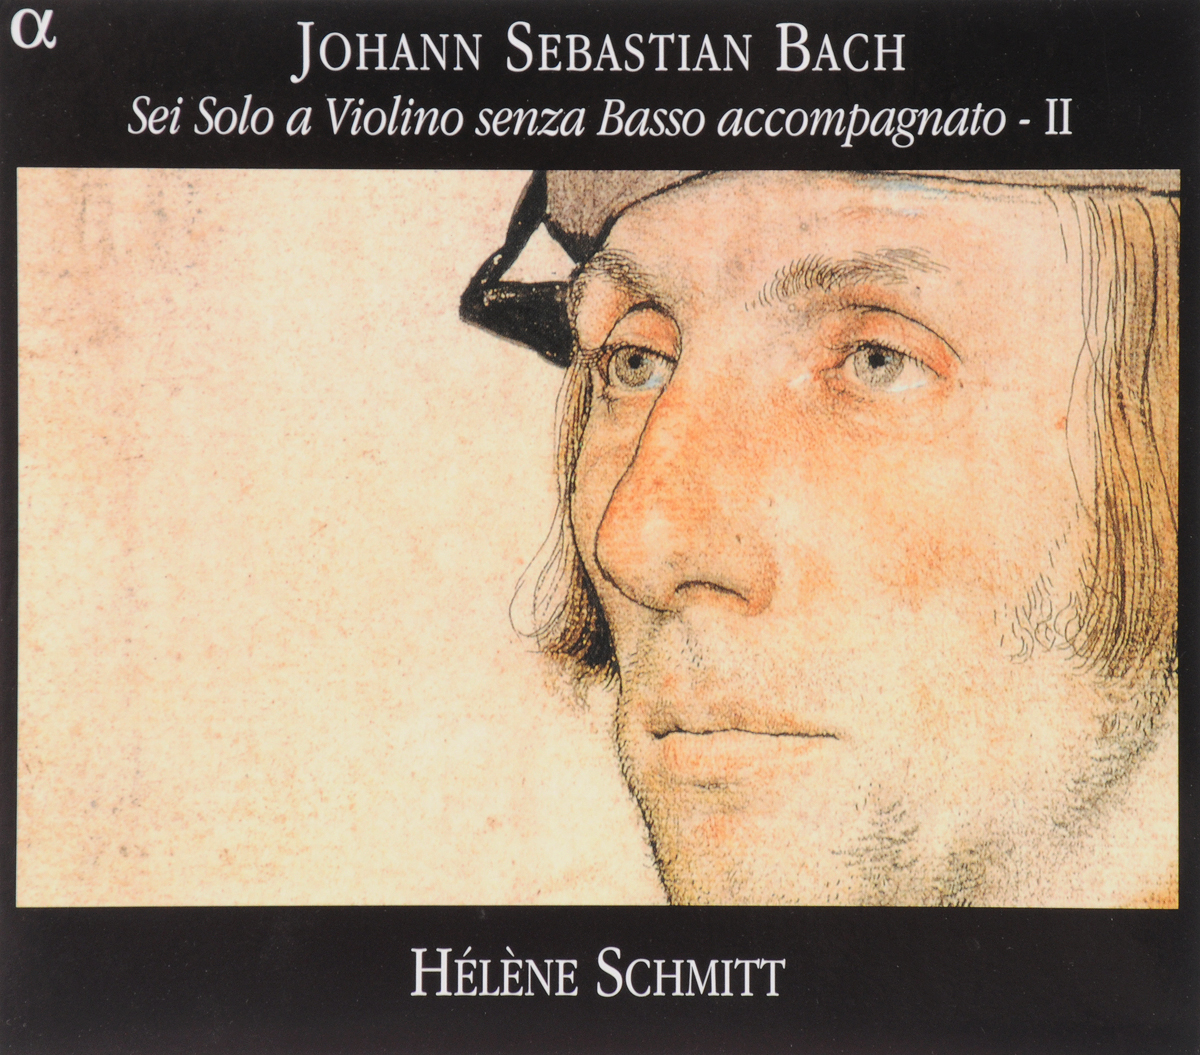 VARIOUS. BACH, J.S./SONATAS AND PARTITAS FOR VIOLIN, VOL.2: SONATA NO 2, BWV 1003; SONATA NO 3, BWV 1005; PARTITA NO 3, BWV 1006/ HELENE SCHMITT, VIOLIN. 1